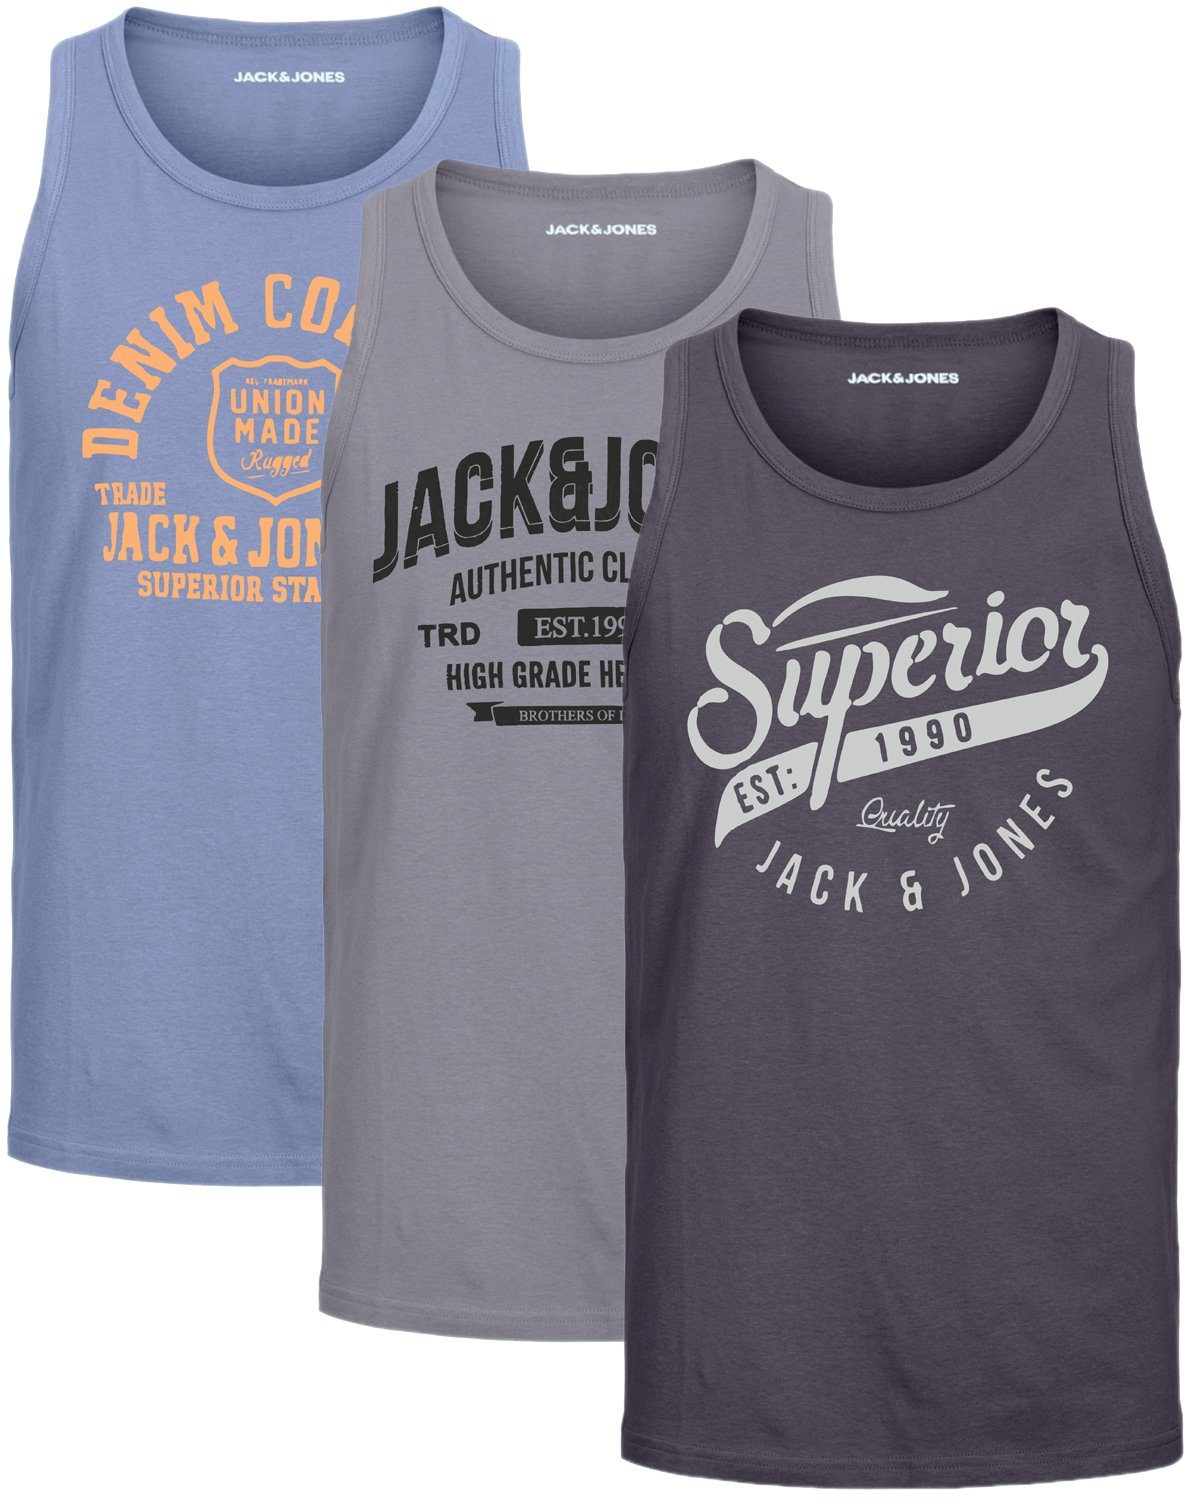 Jack & Jones Tanktop Bequemes Slimfit Shirt mit Printdruck (3er-Pack) unifarbenes Oberteil aus Baumwolle, Größe S